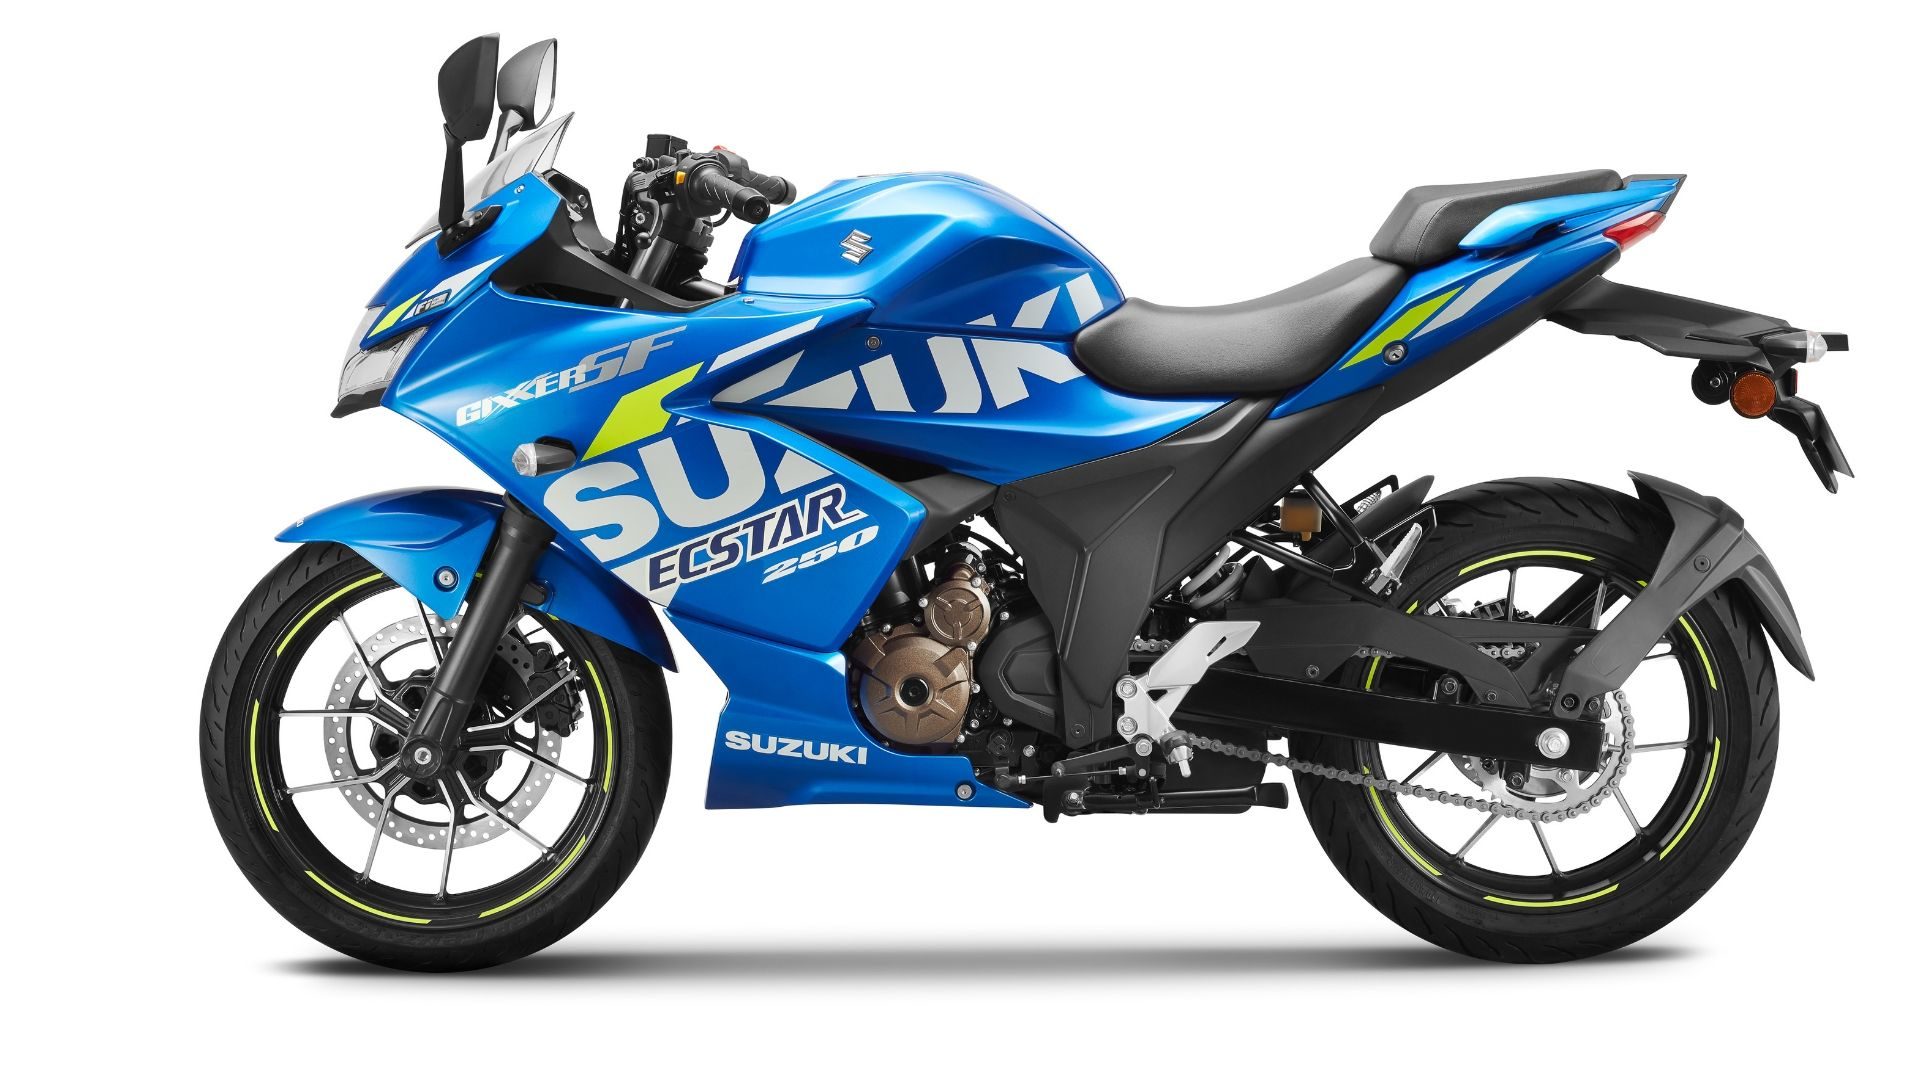 https://gaadiwaadi.com/wp-content/uploads/2019/08/Suzuki-Gixxer-SF-250-Moto-GP-Edition-Launched-Priced-At-Rs.-1.71-Lakh-2-1920x1080.jpg